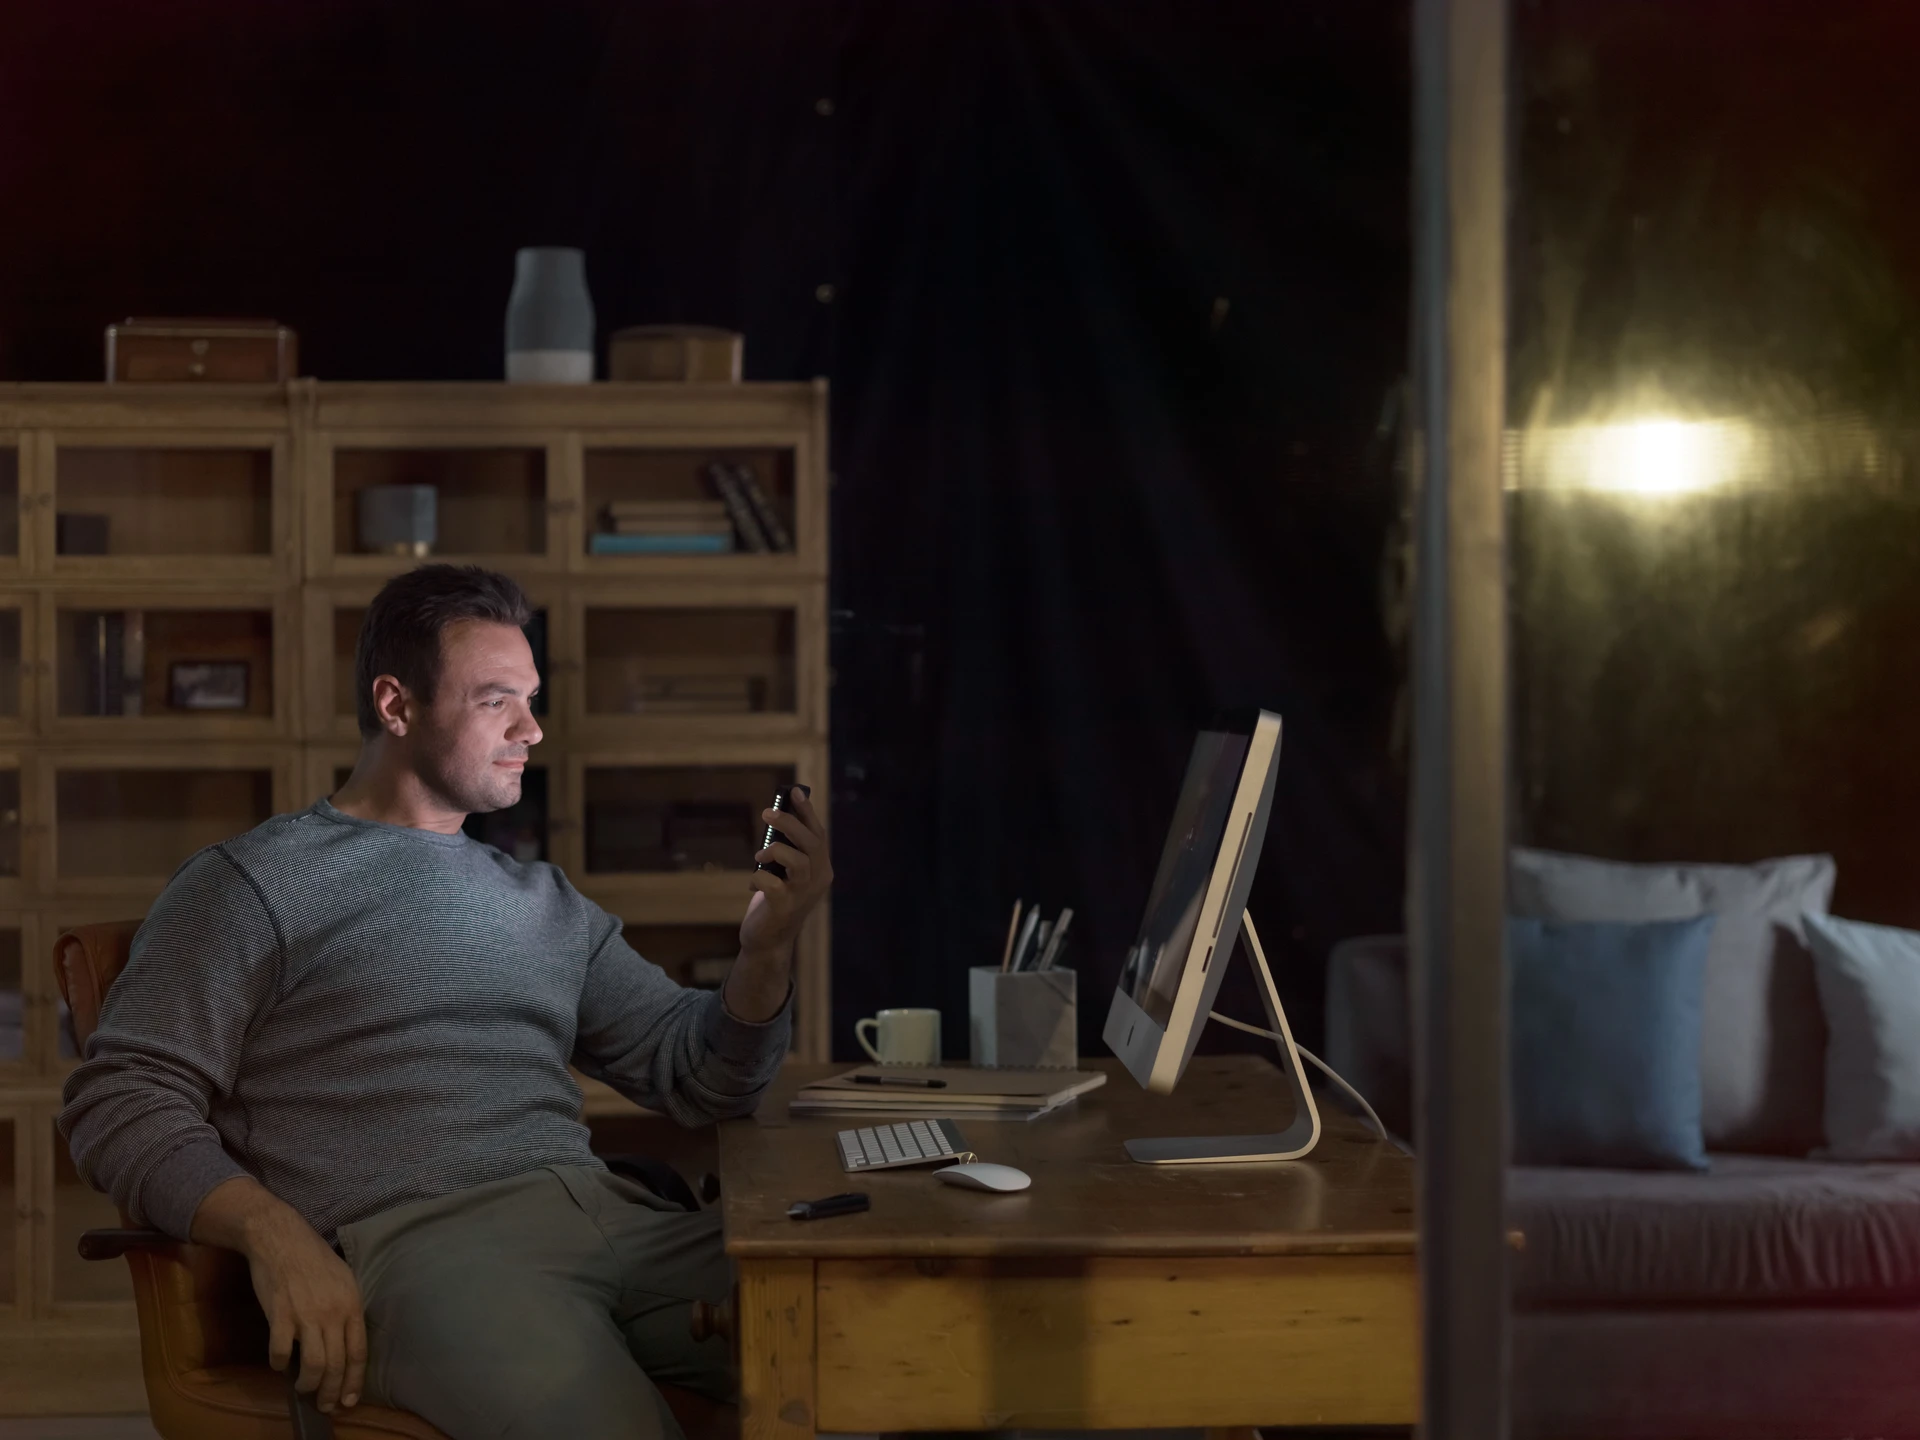 Man checking phone in dimly lit studio room